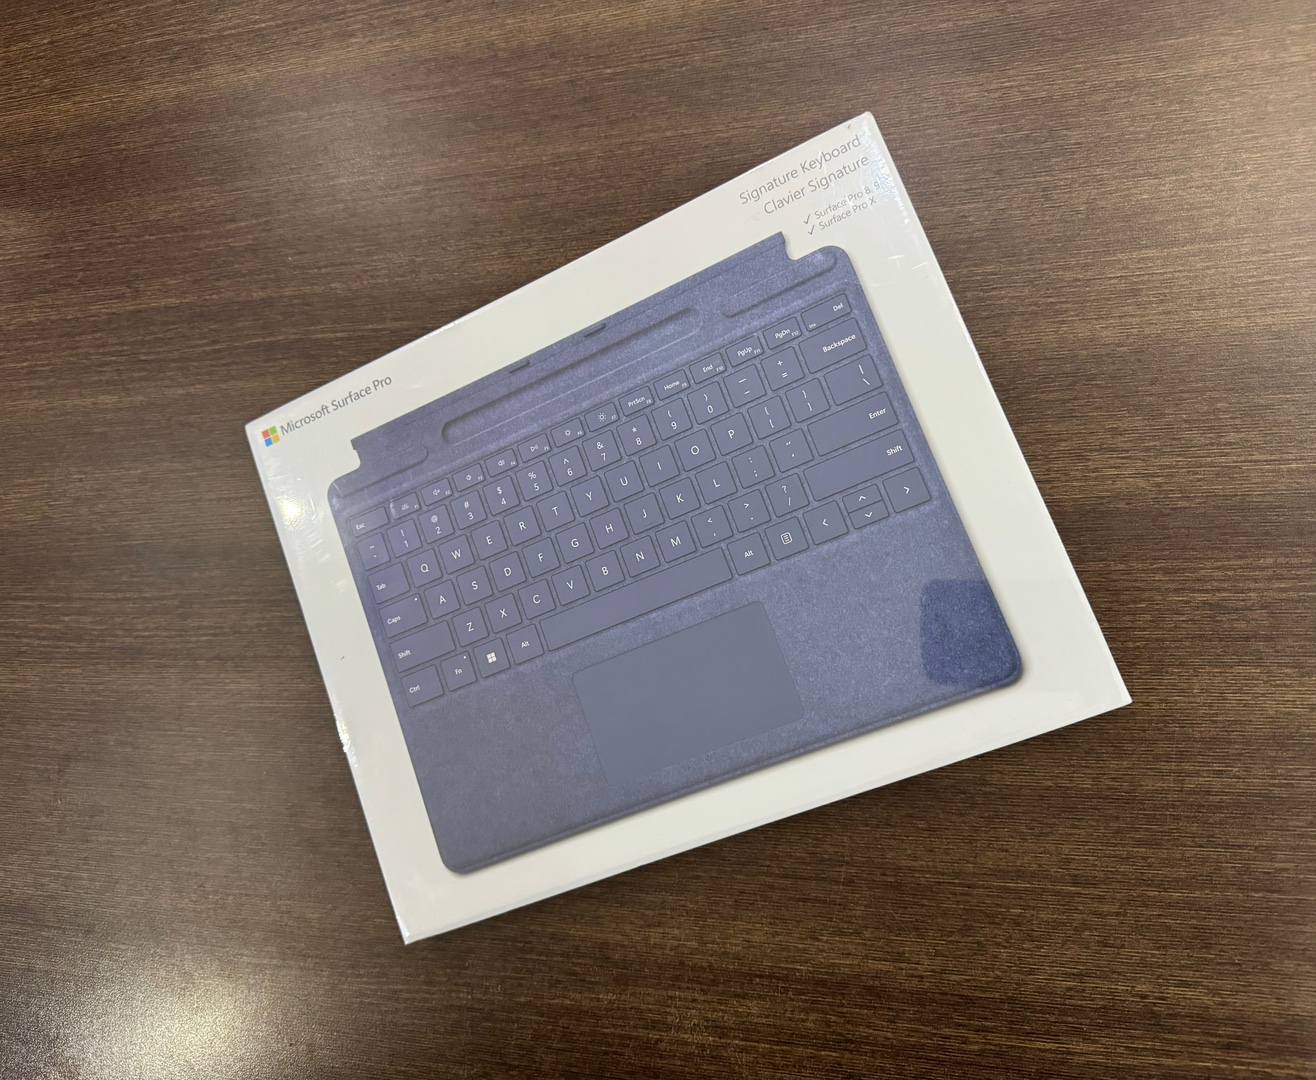 accesorios para electronica - Teclado Signature Microsoft Surface Pro Nuevo Sellado, RD$ 13,500 NEG